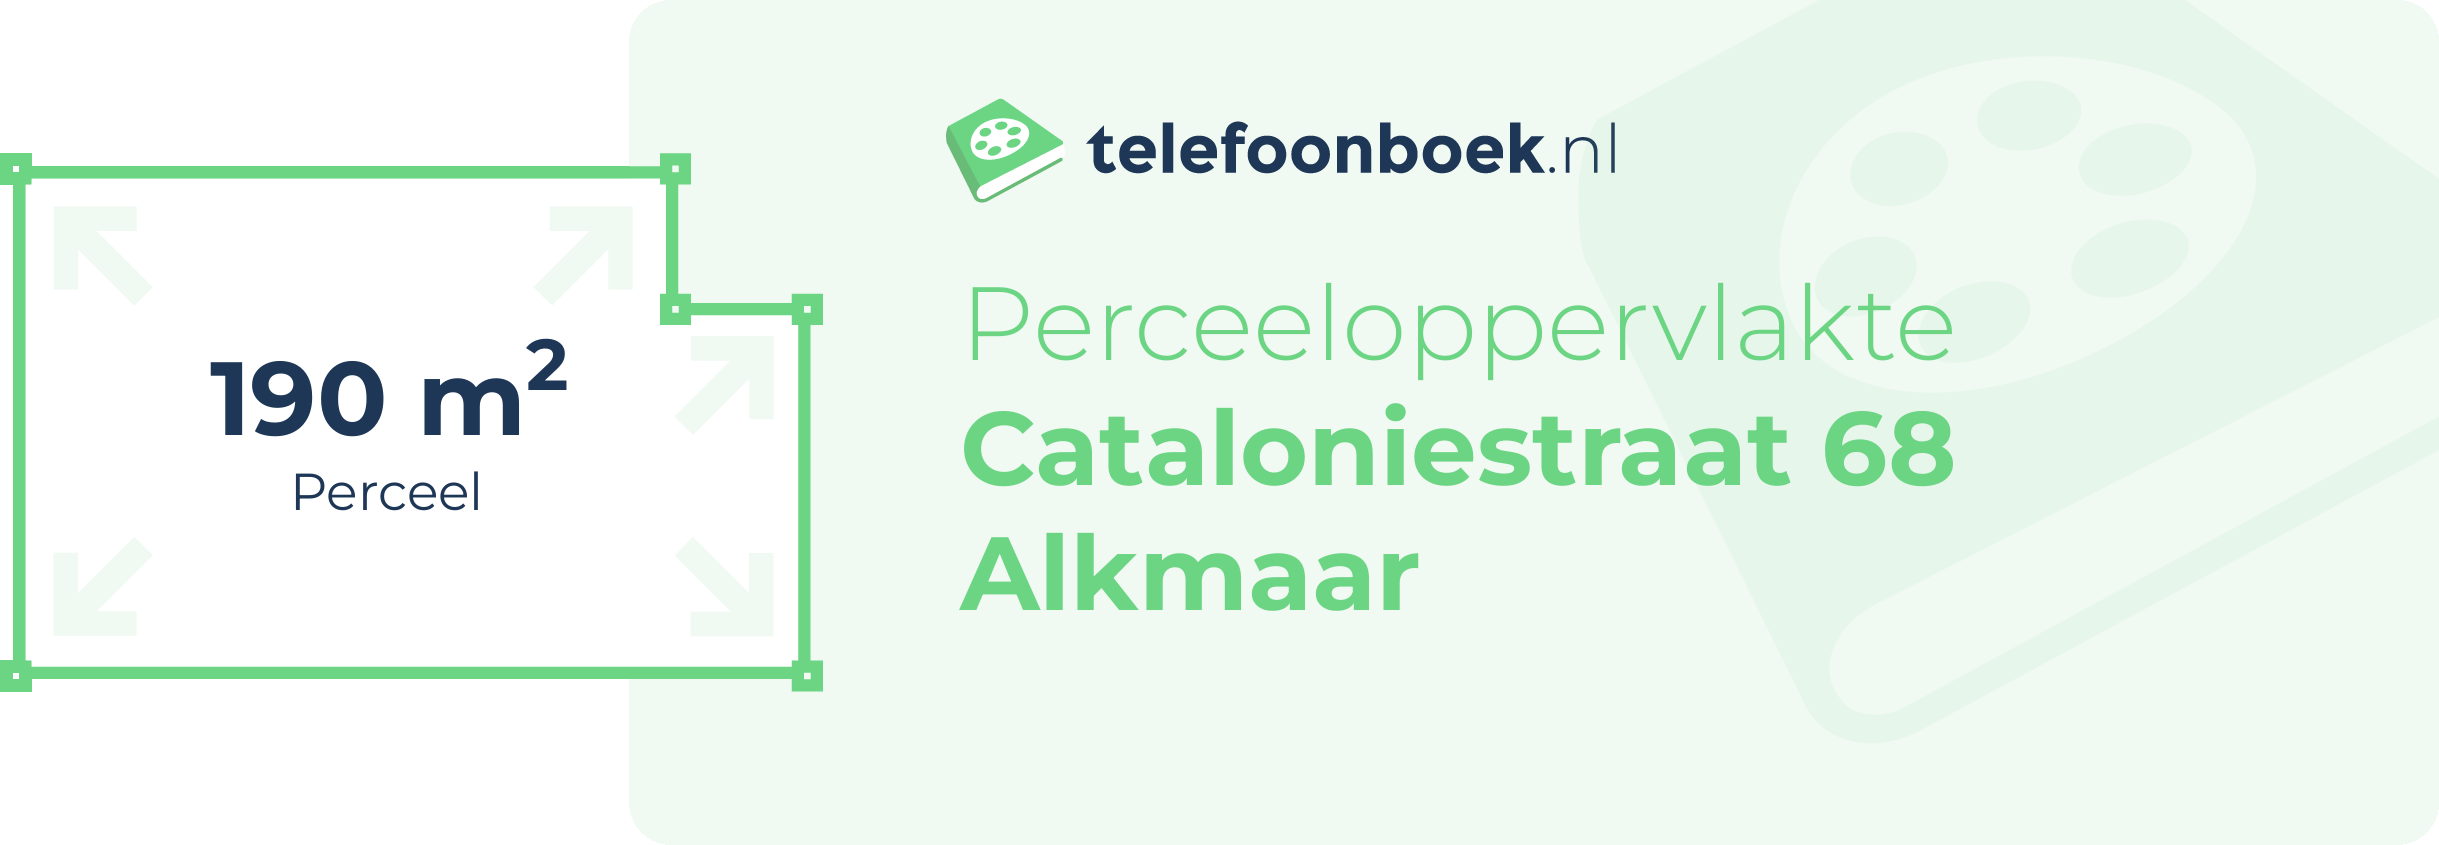 Perceeloppervlakte Cataloniestraat 68 Alkmaar